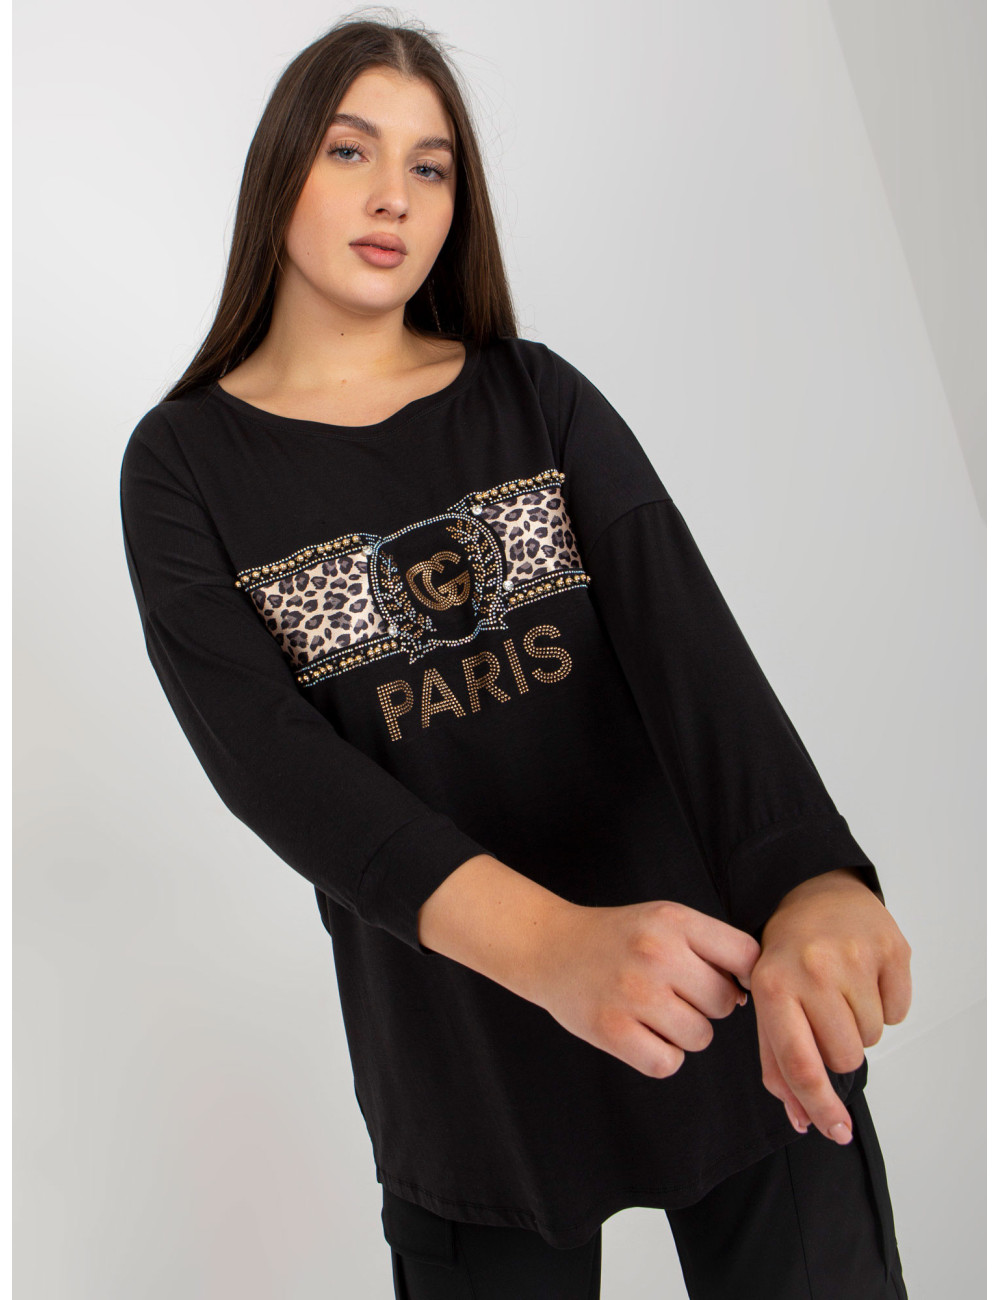 Black blouse for women plus size with appliques 